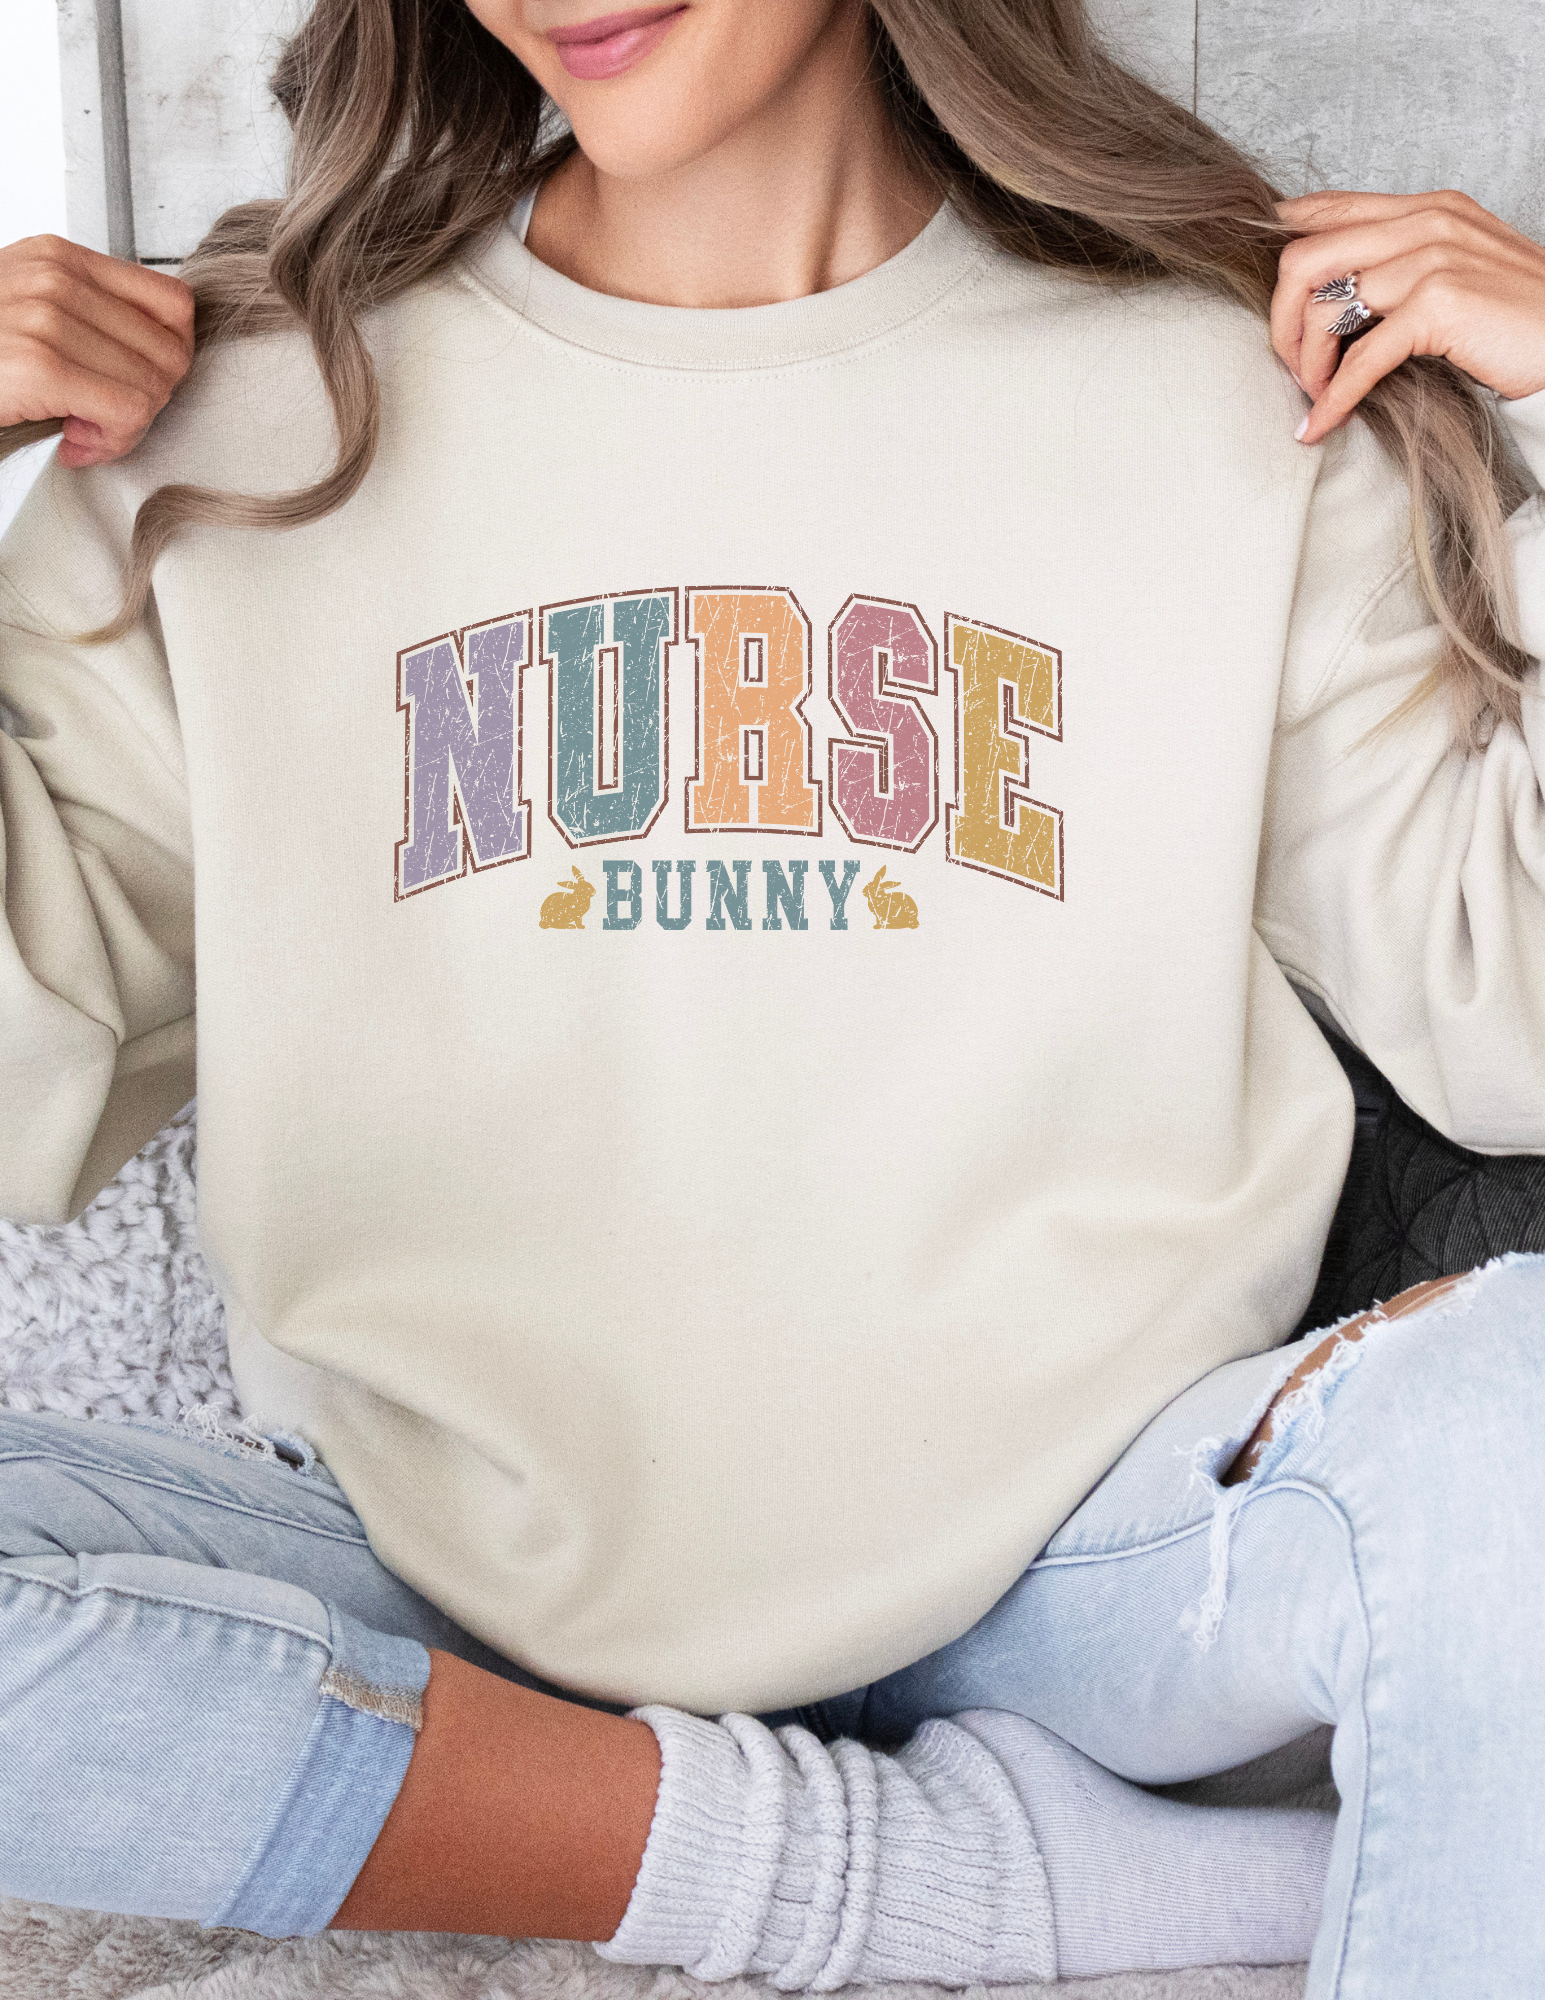 Nurse Easter Bunny Sweatshirt